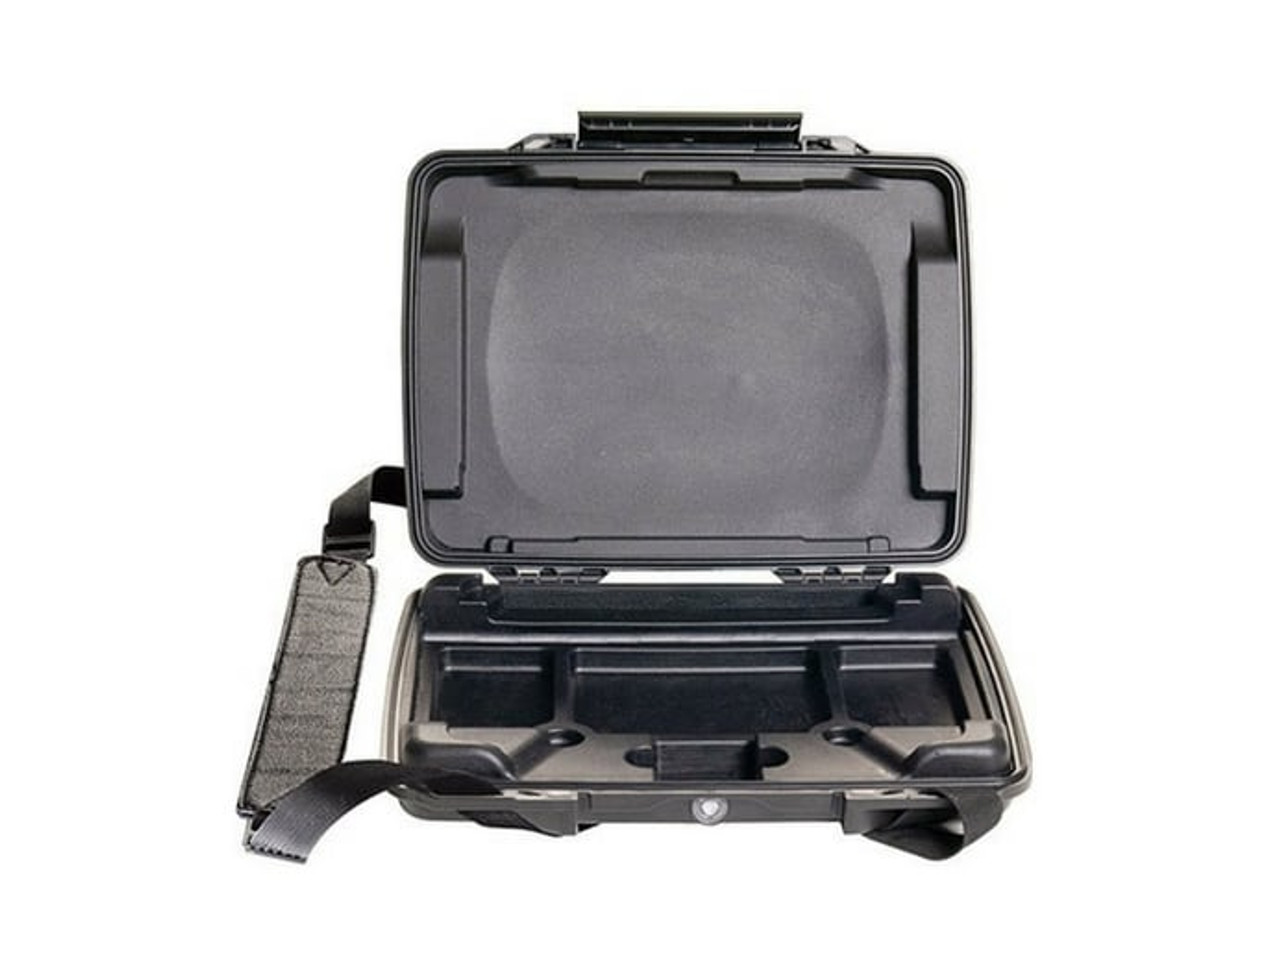 Peli 1075 Hardback Case with iPad insert